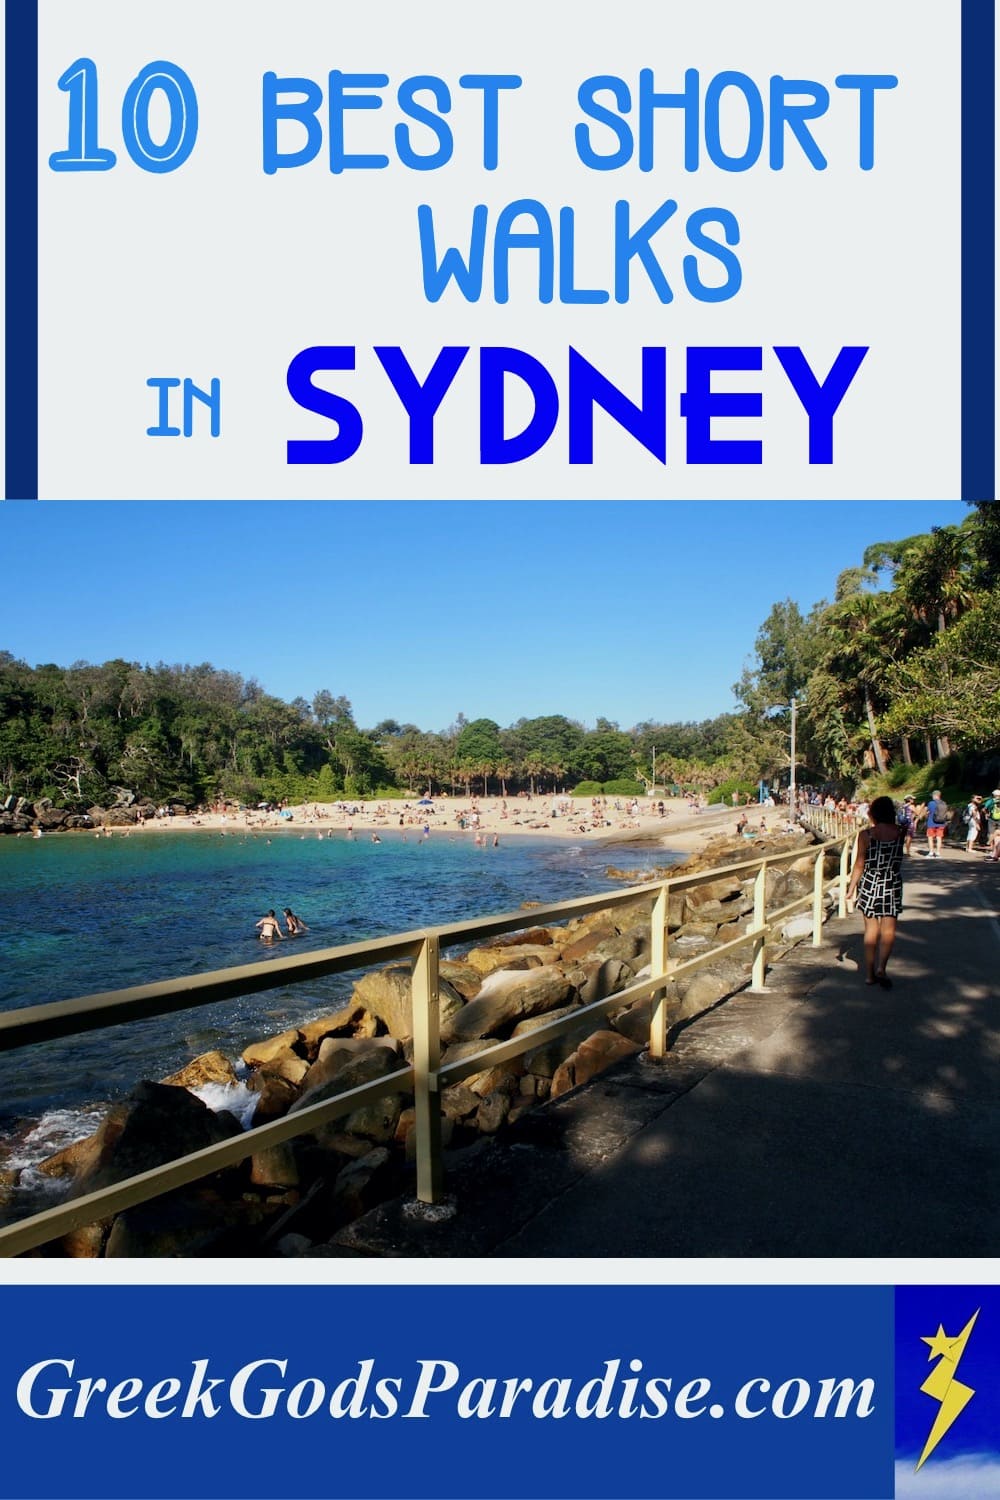 10 Best Short Walks in Sydney